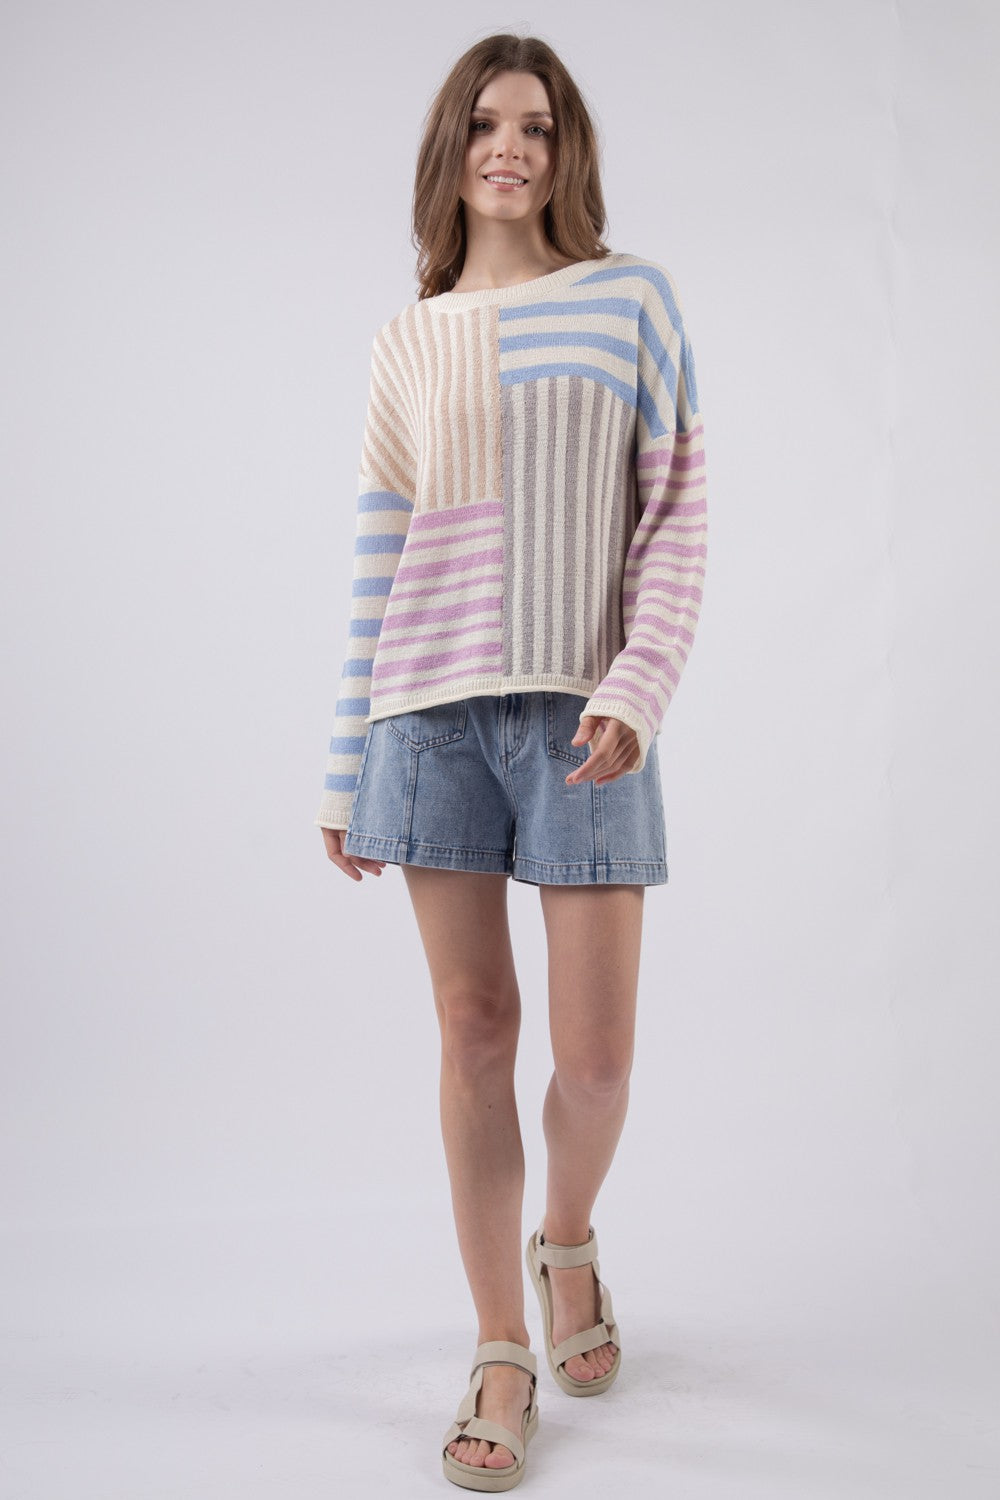 Colette Plus Taupe Multi Stripe Sweater Top